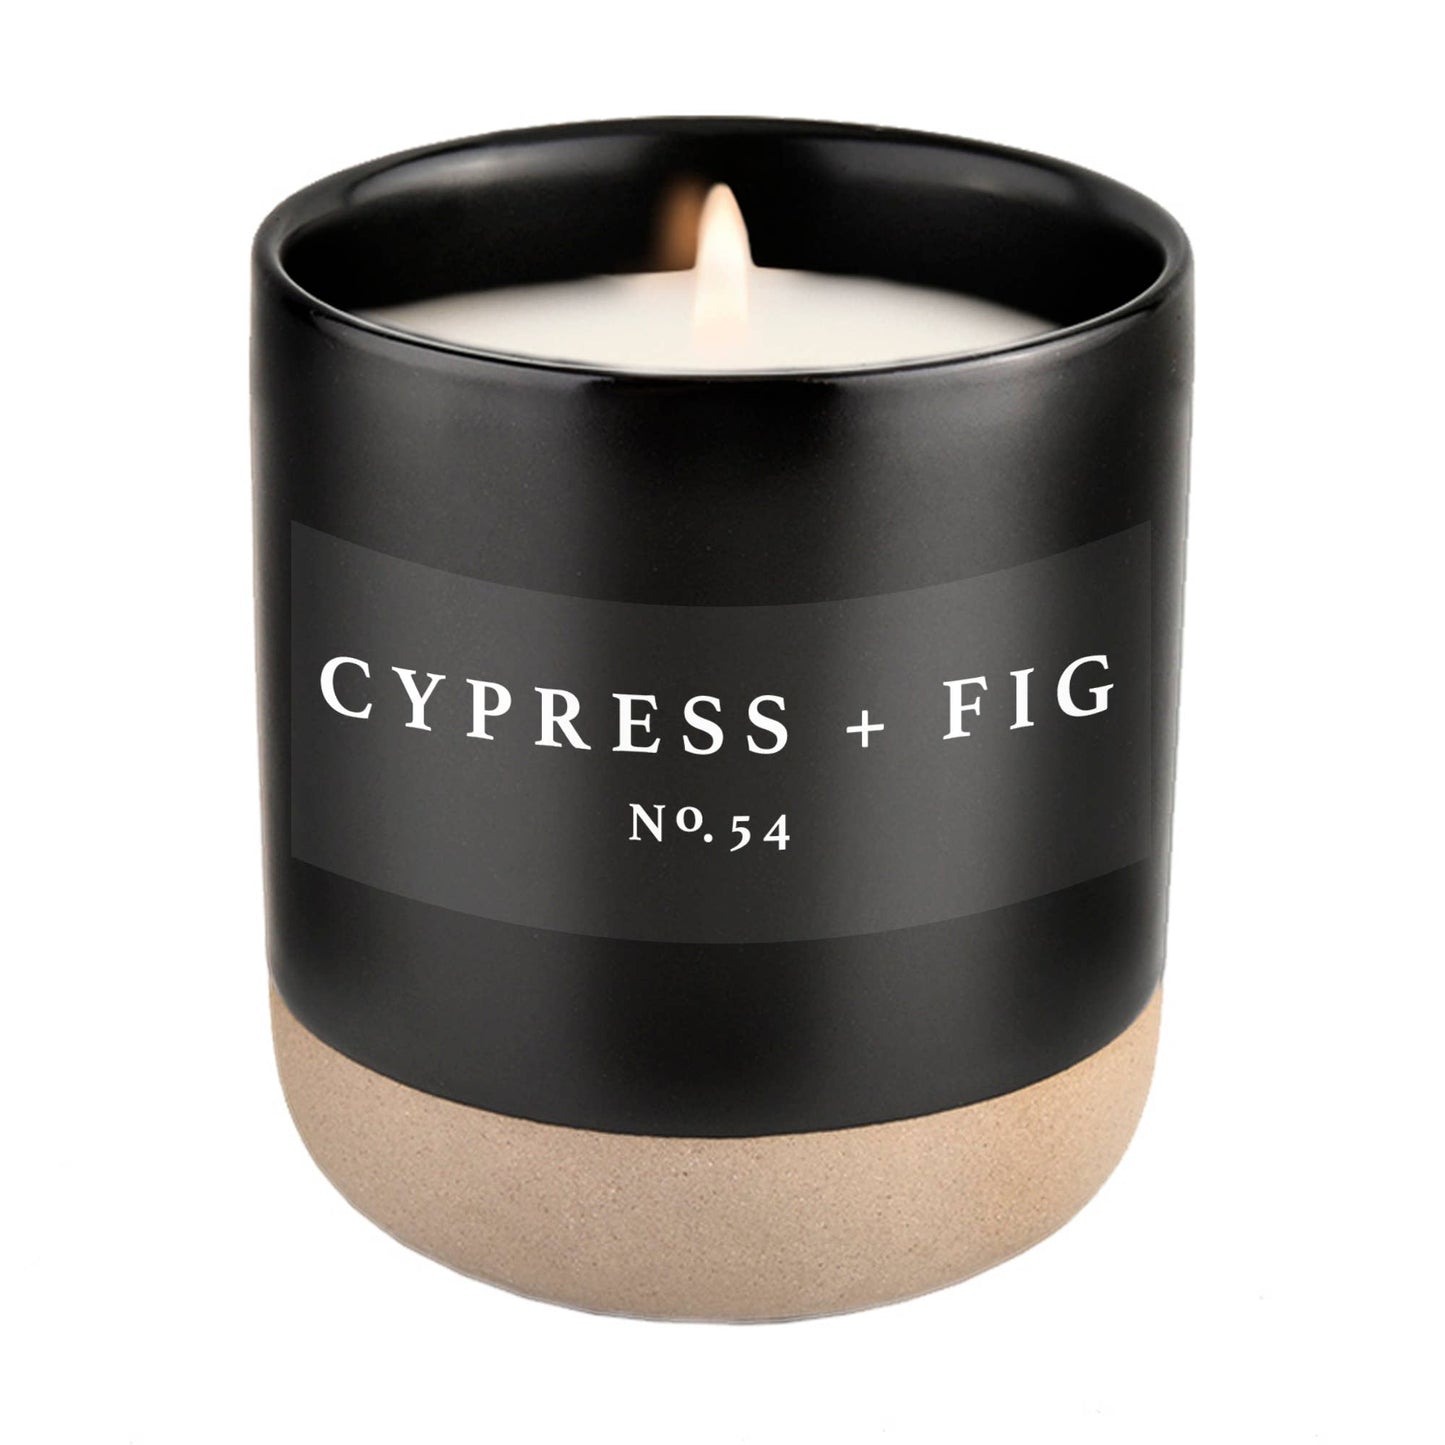 Cypress and Fig Soy Candle - Black Stoneware Jar - 12 oz